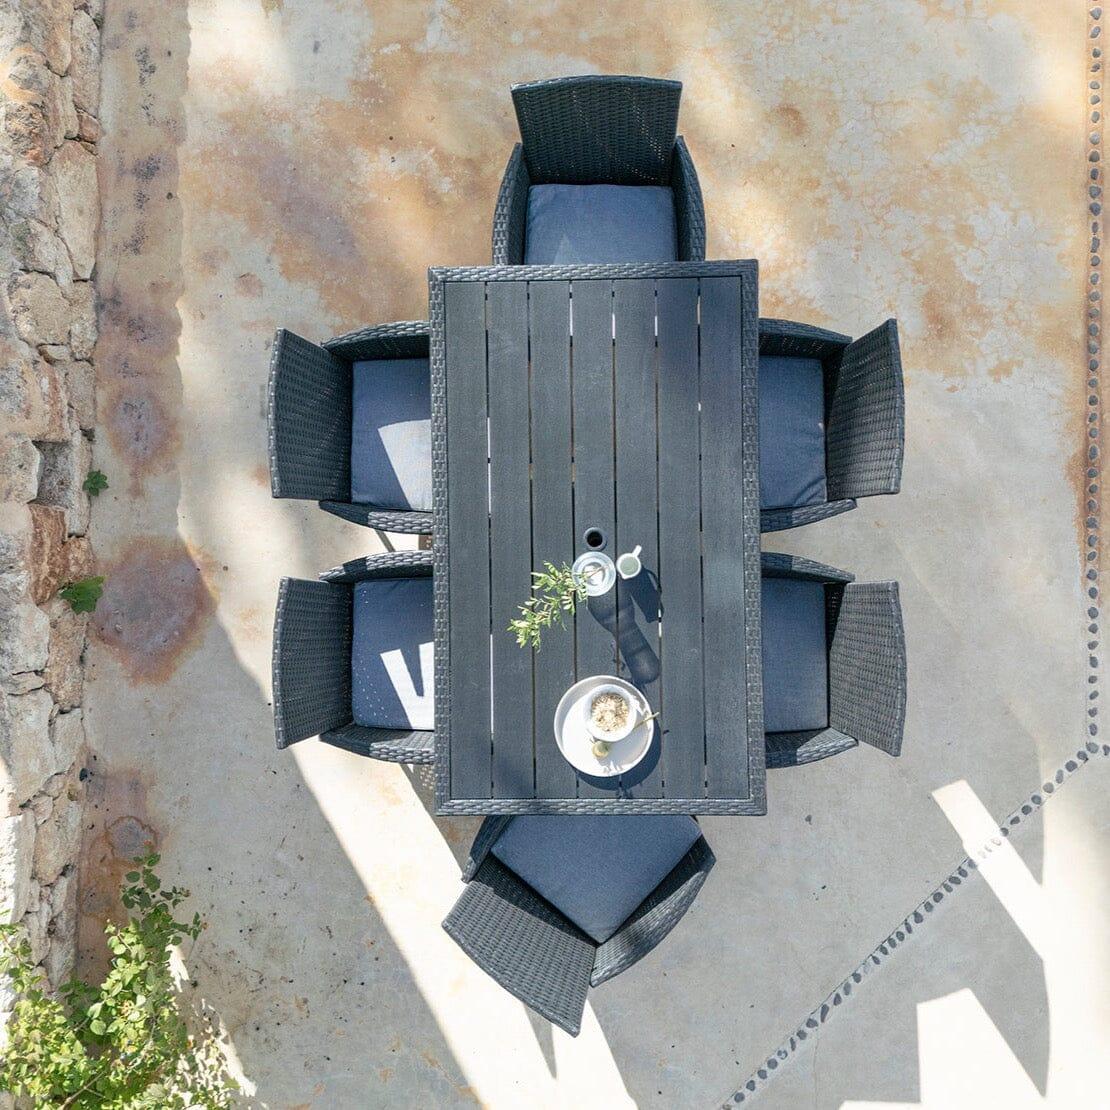 Marston 6 Seater Rattan Outdoor Dining Set - Rattan Garden Furniture - Black - Polywood Top - Laura James